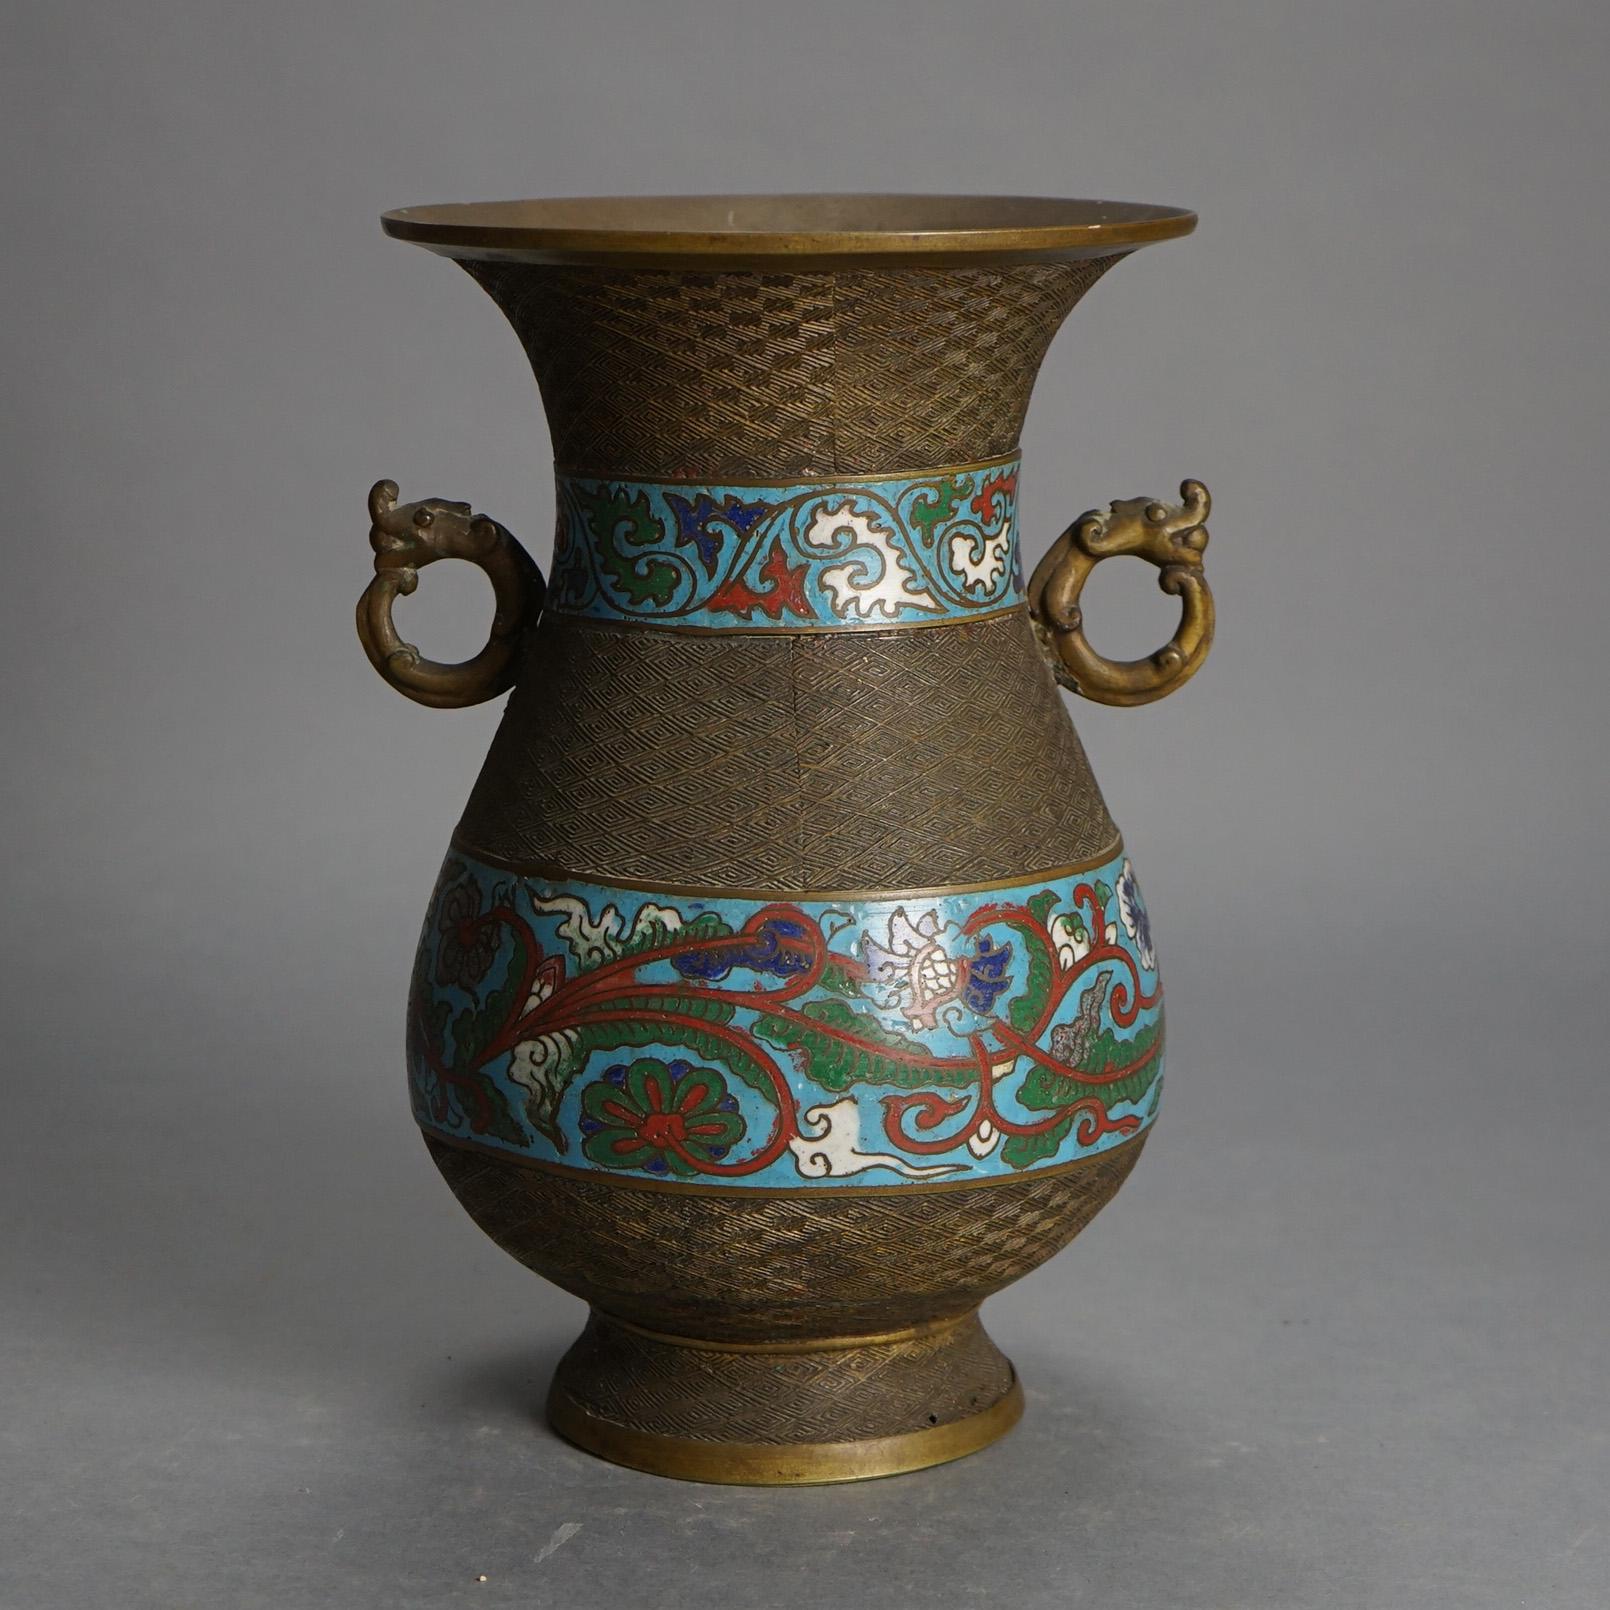 Antique Chinese Bronze Cloisonne Enameled Vase with Double Dragon Form Handles C1910

Measures - 11.75